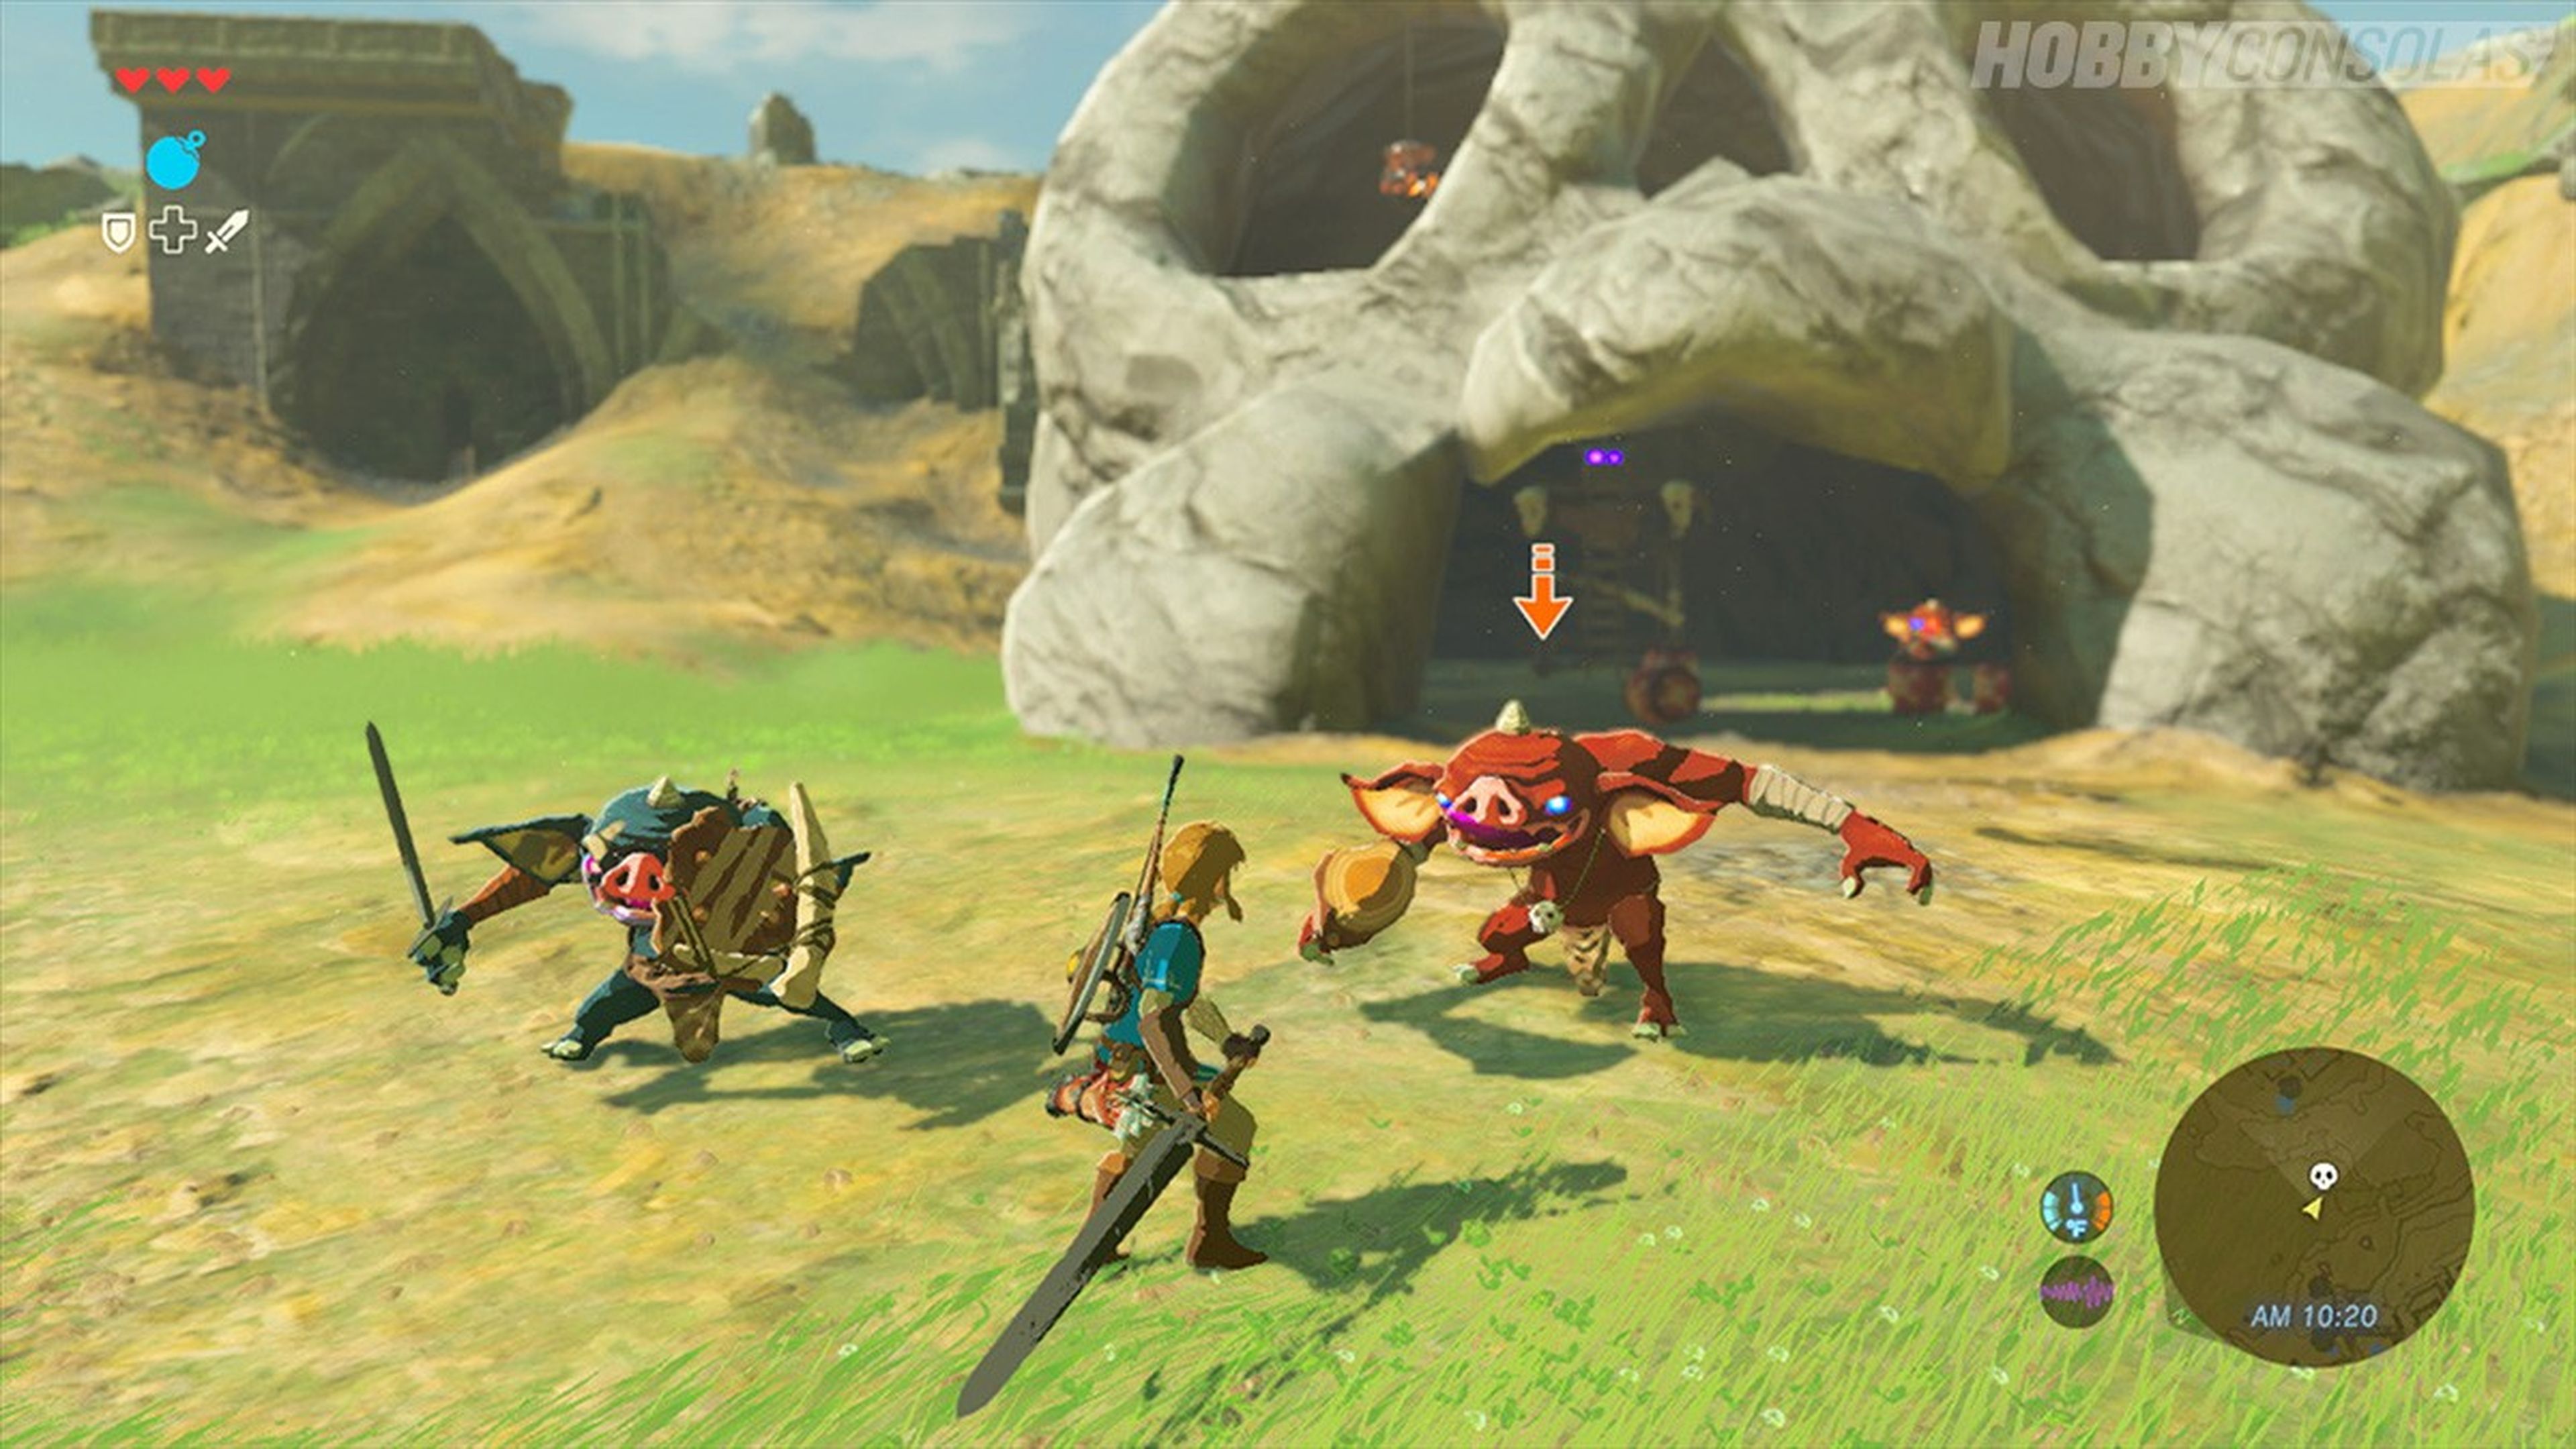 E3 2016 - Avance de The Legend of Zelda Breath of the Wild